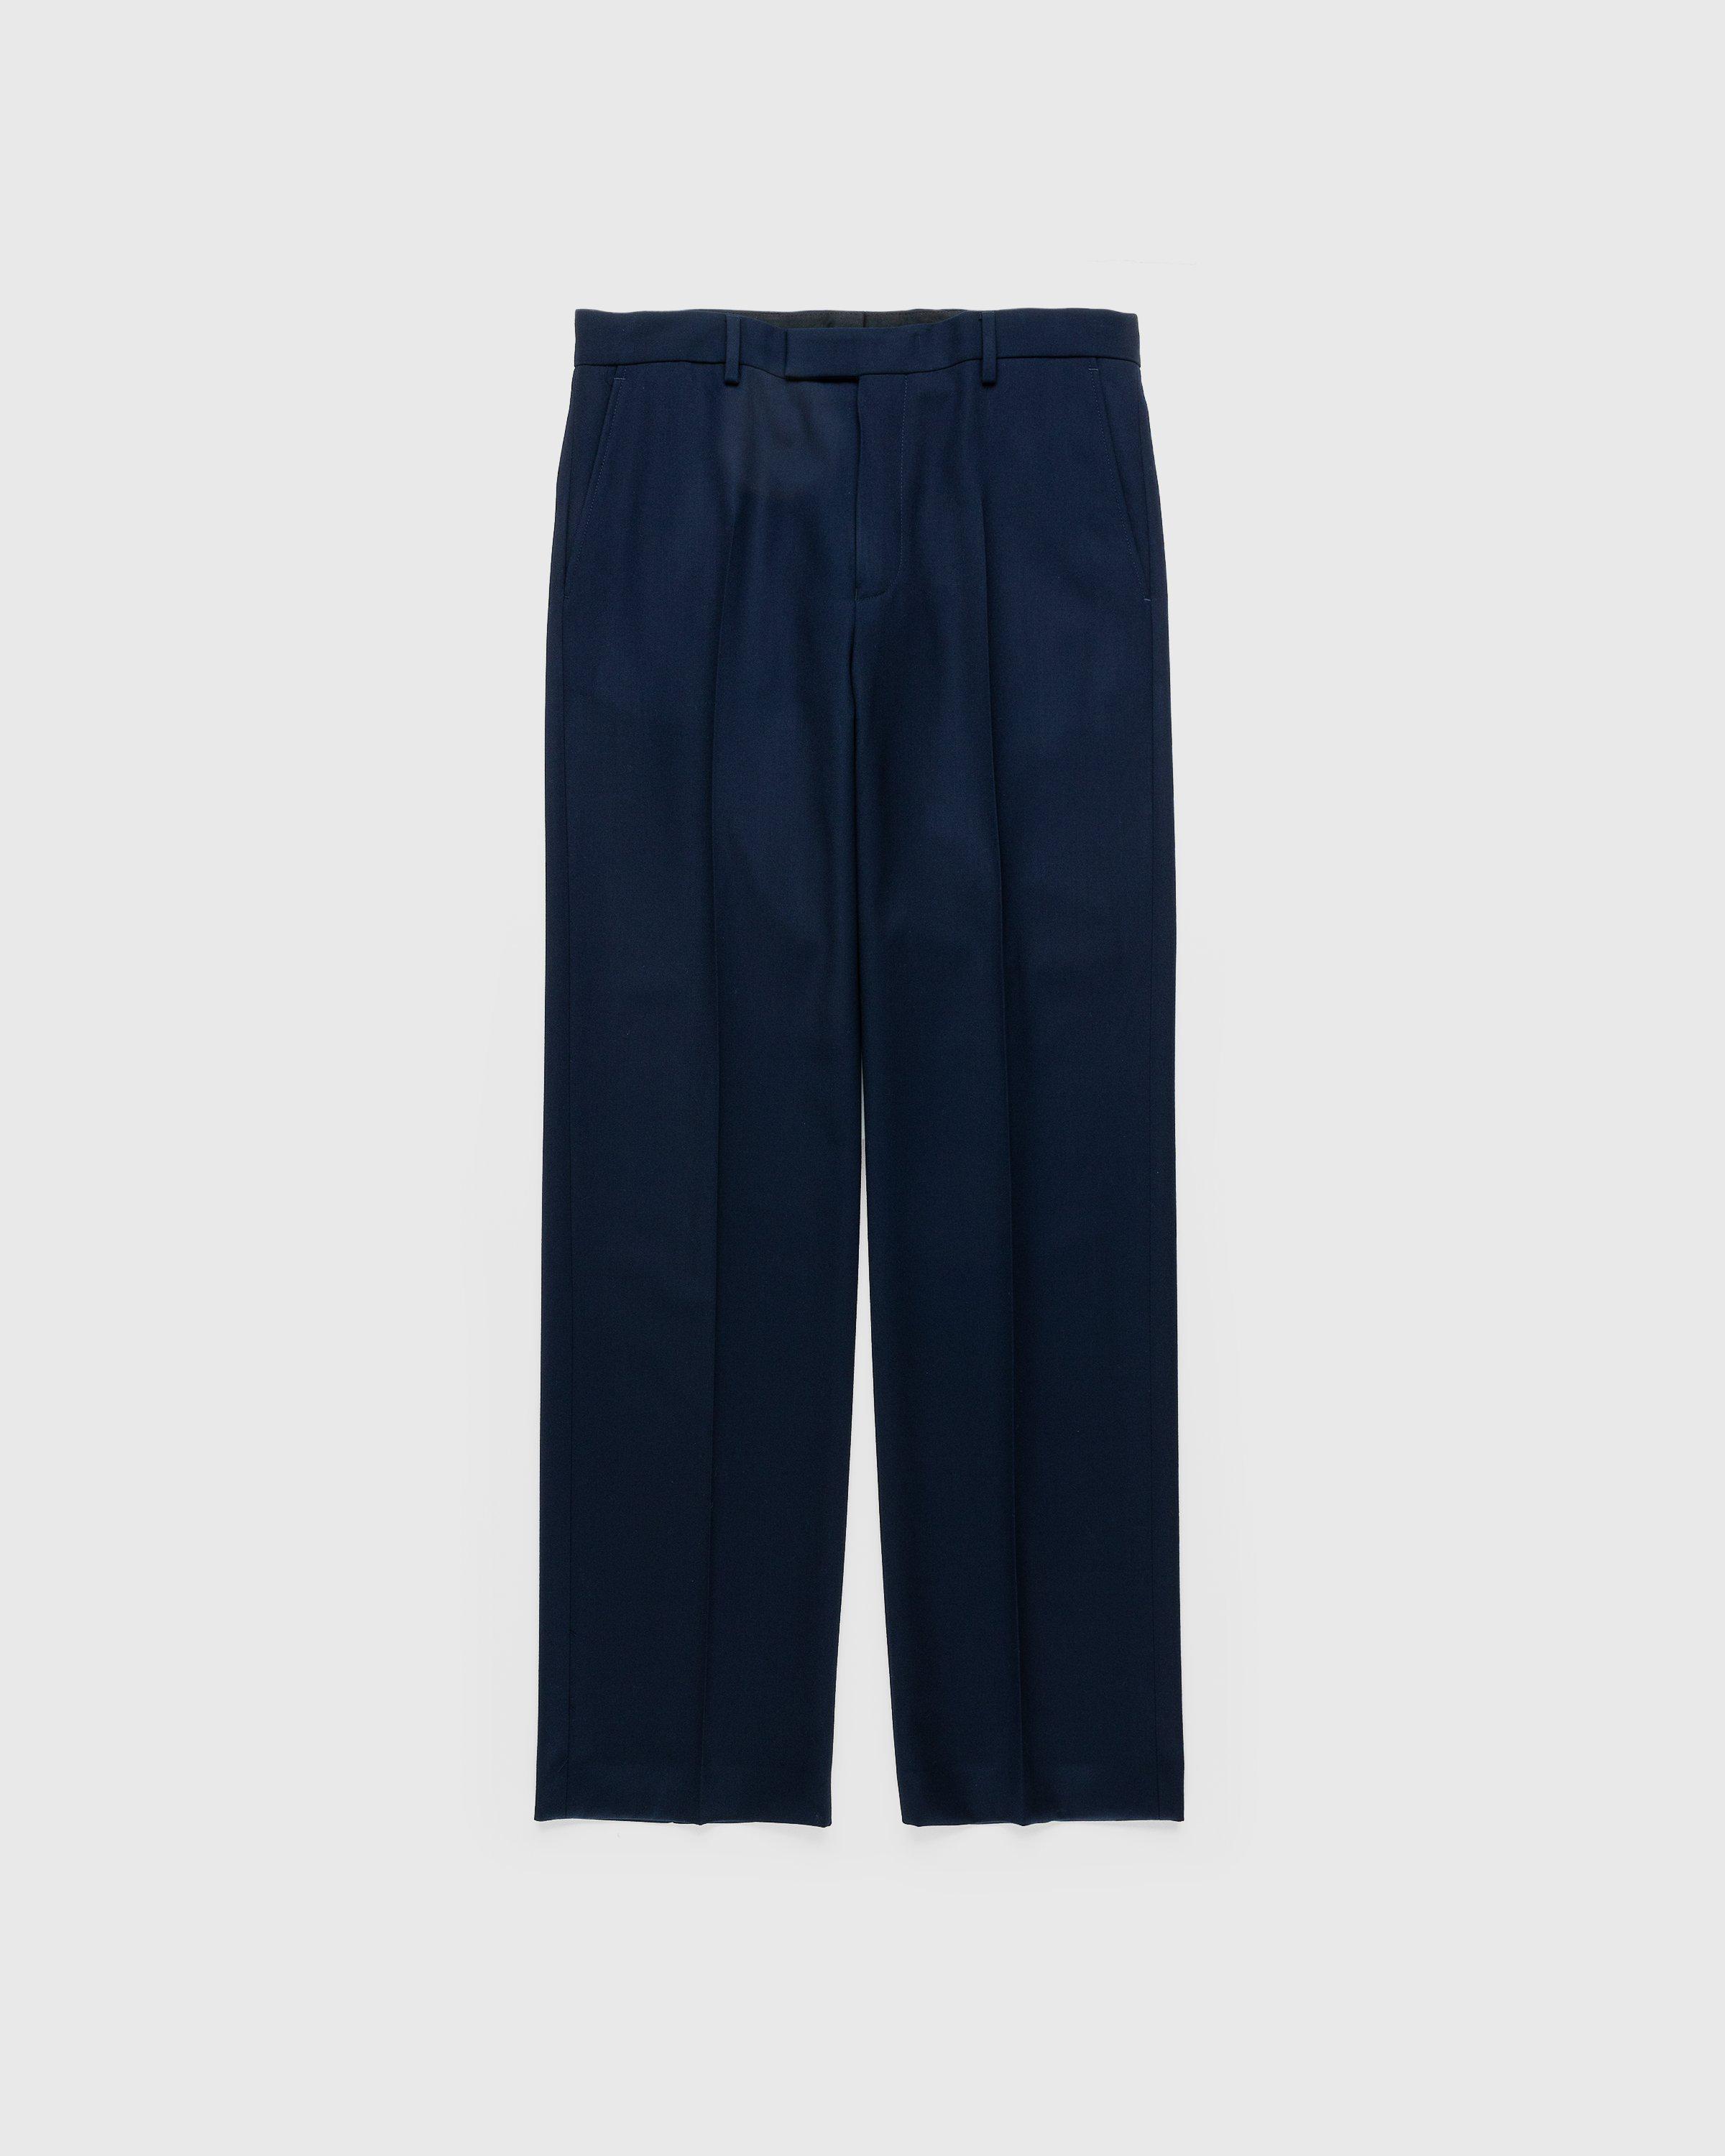 Dries van Noten – Pinnet Long Pants Blue by DRIES VAN NOTEN